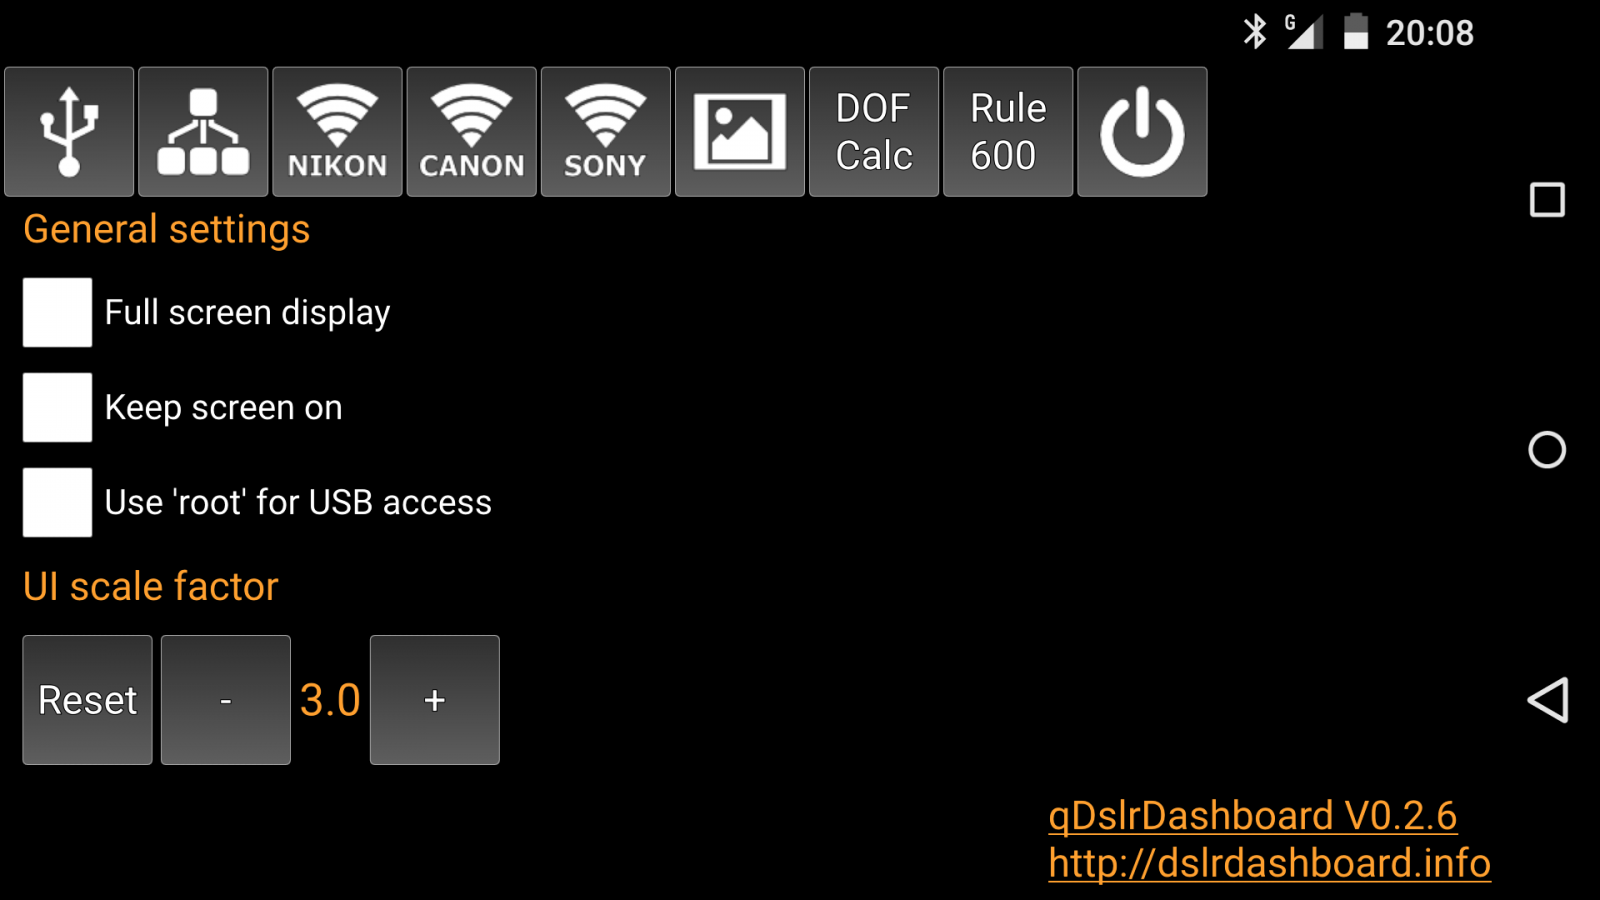 qdslrdashboard-nikon-remote-control-app-android-0_2_6